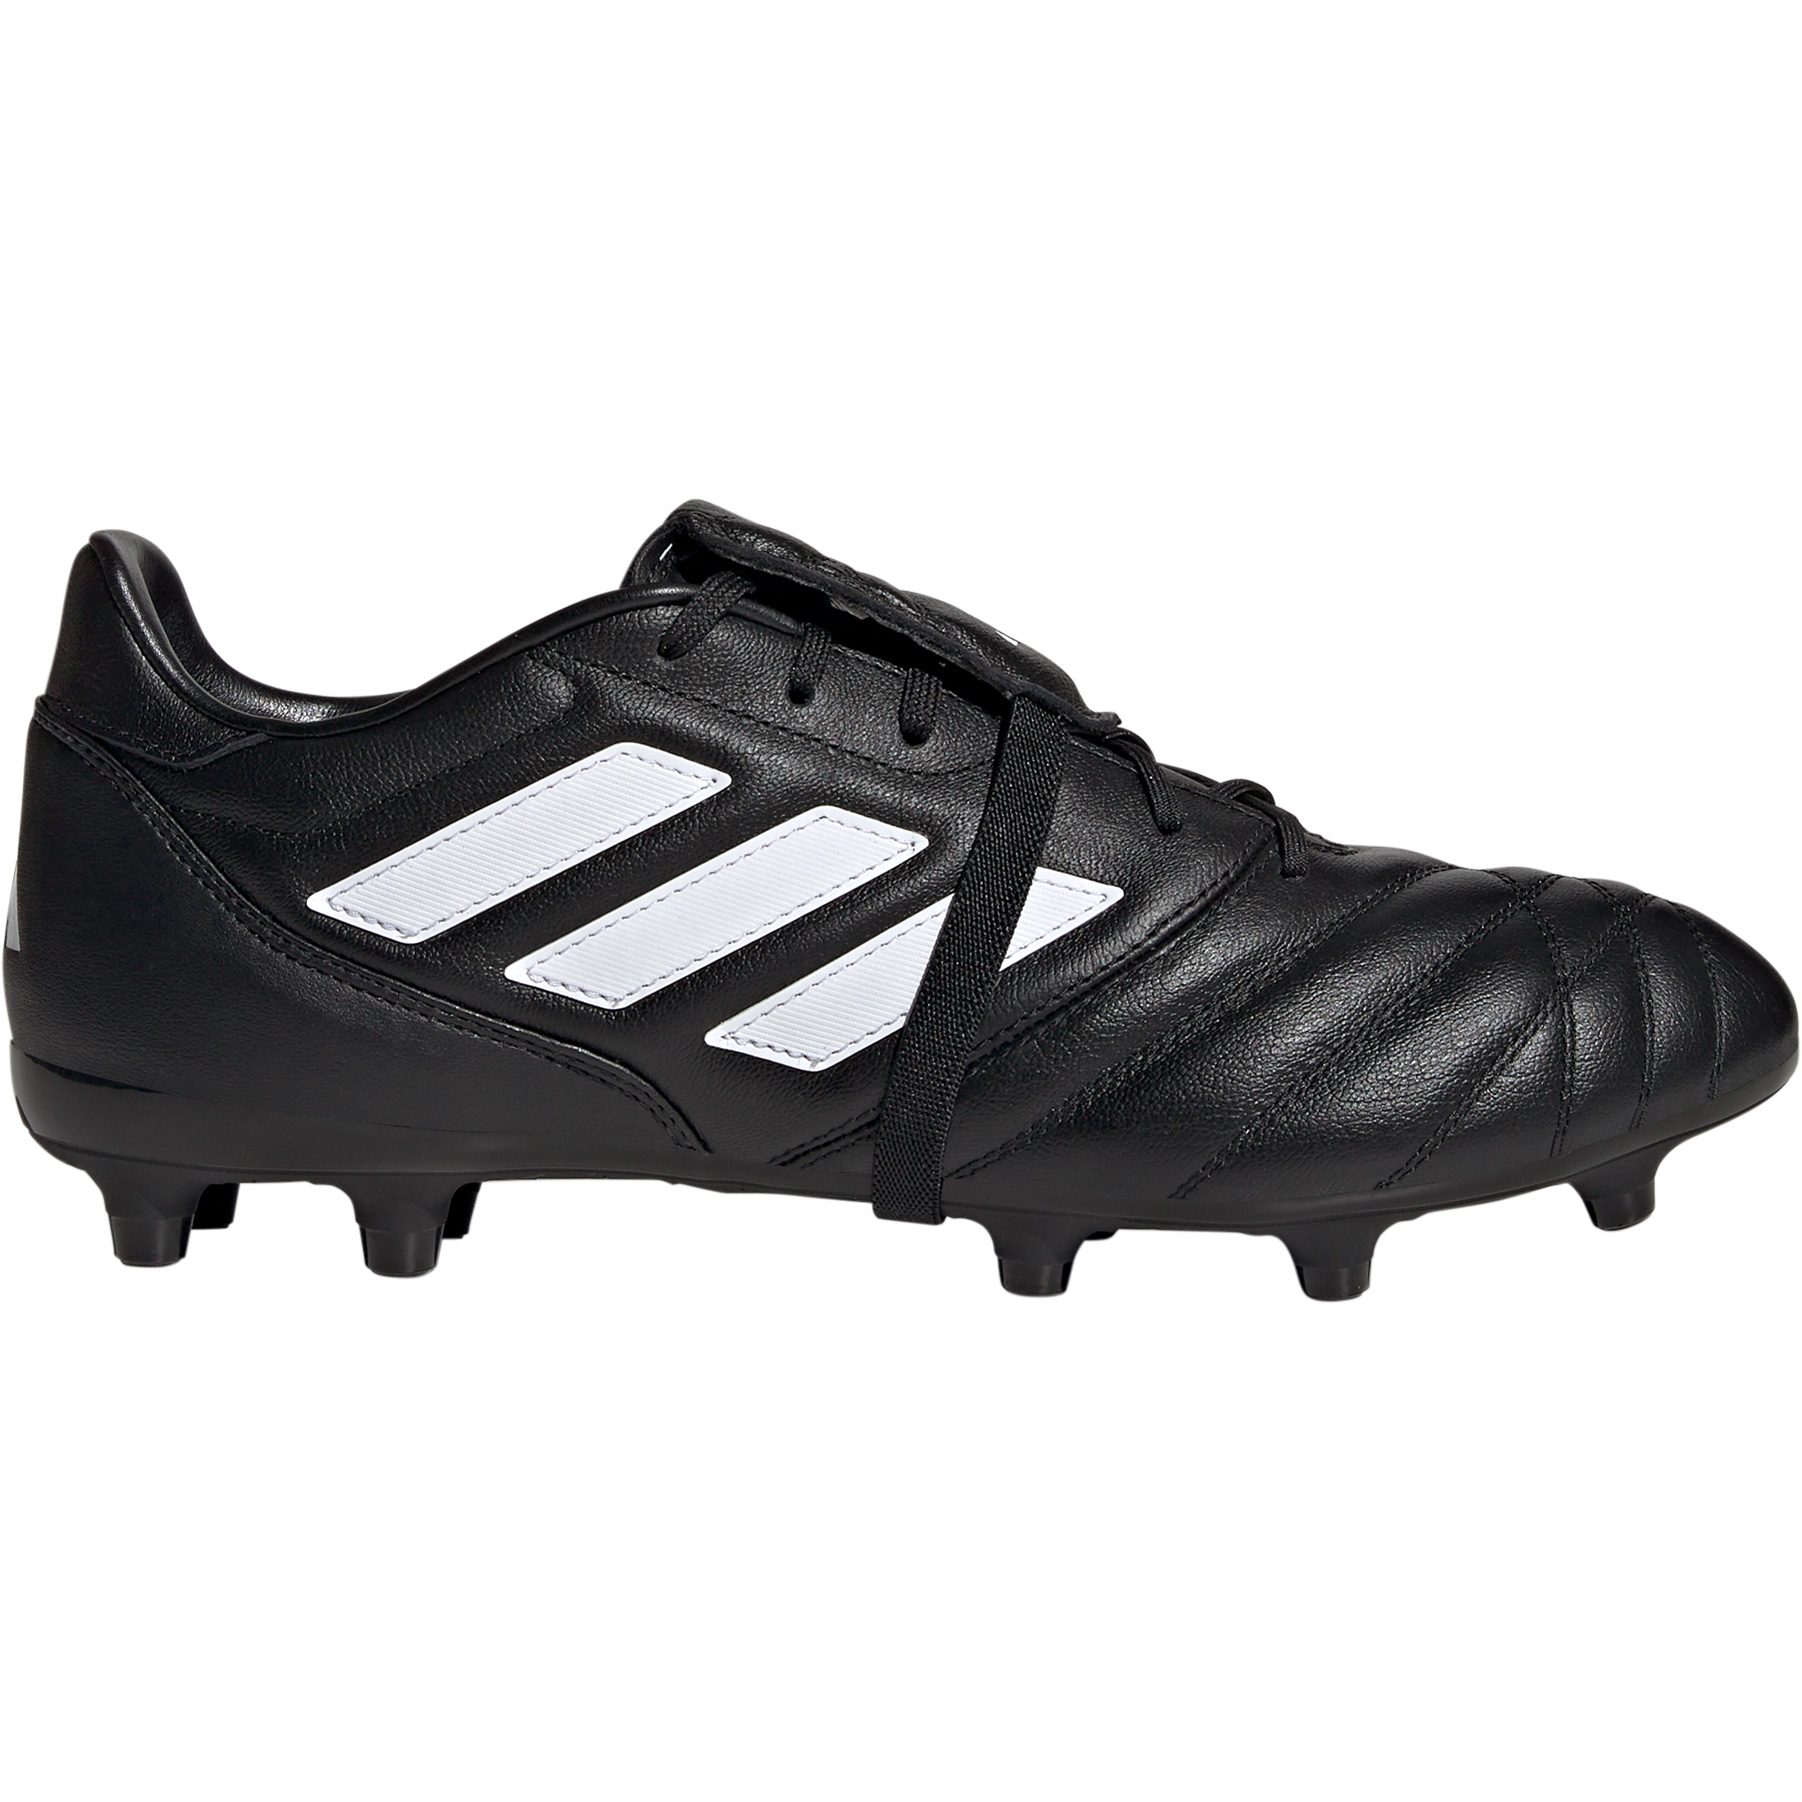 adidas - Gloro Sport Bittl at Football Shoes black core FG Copa Shop